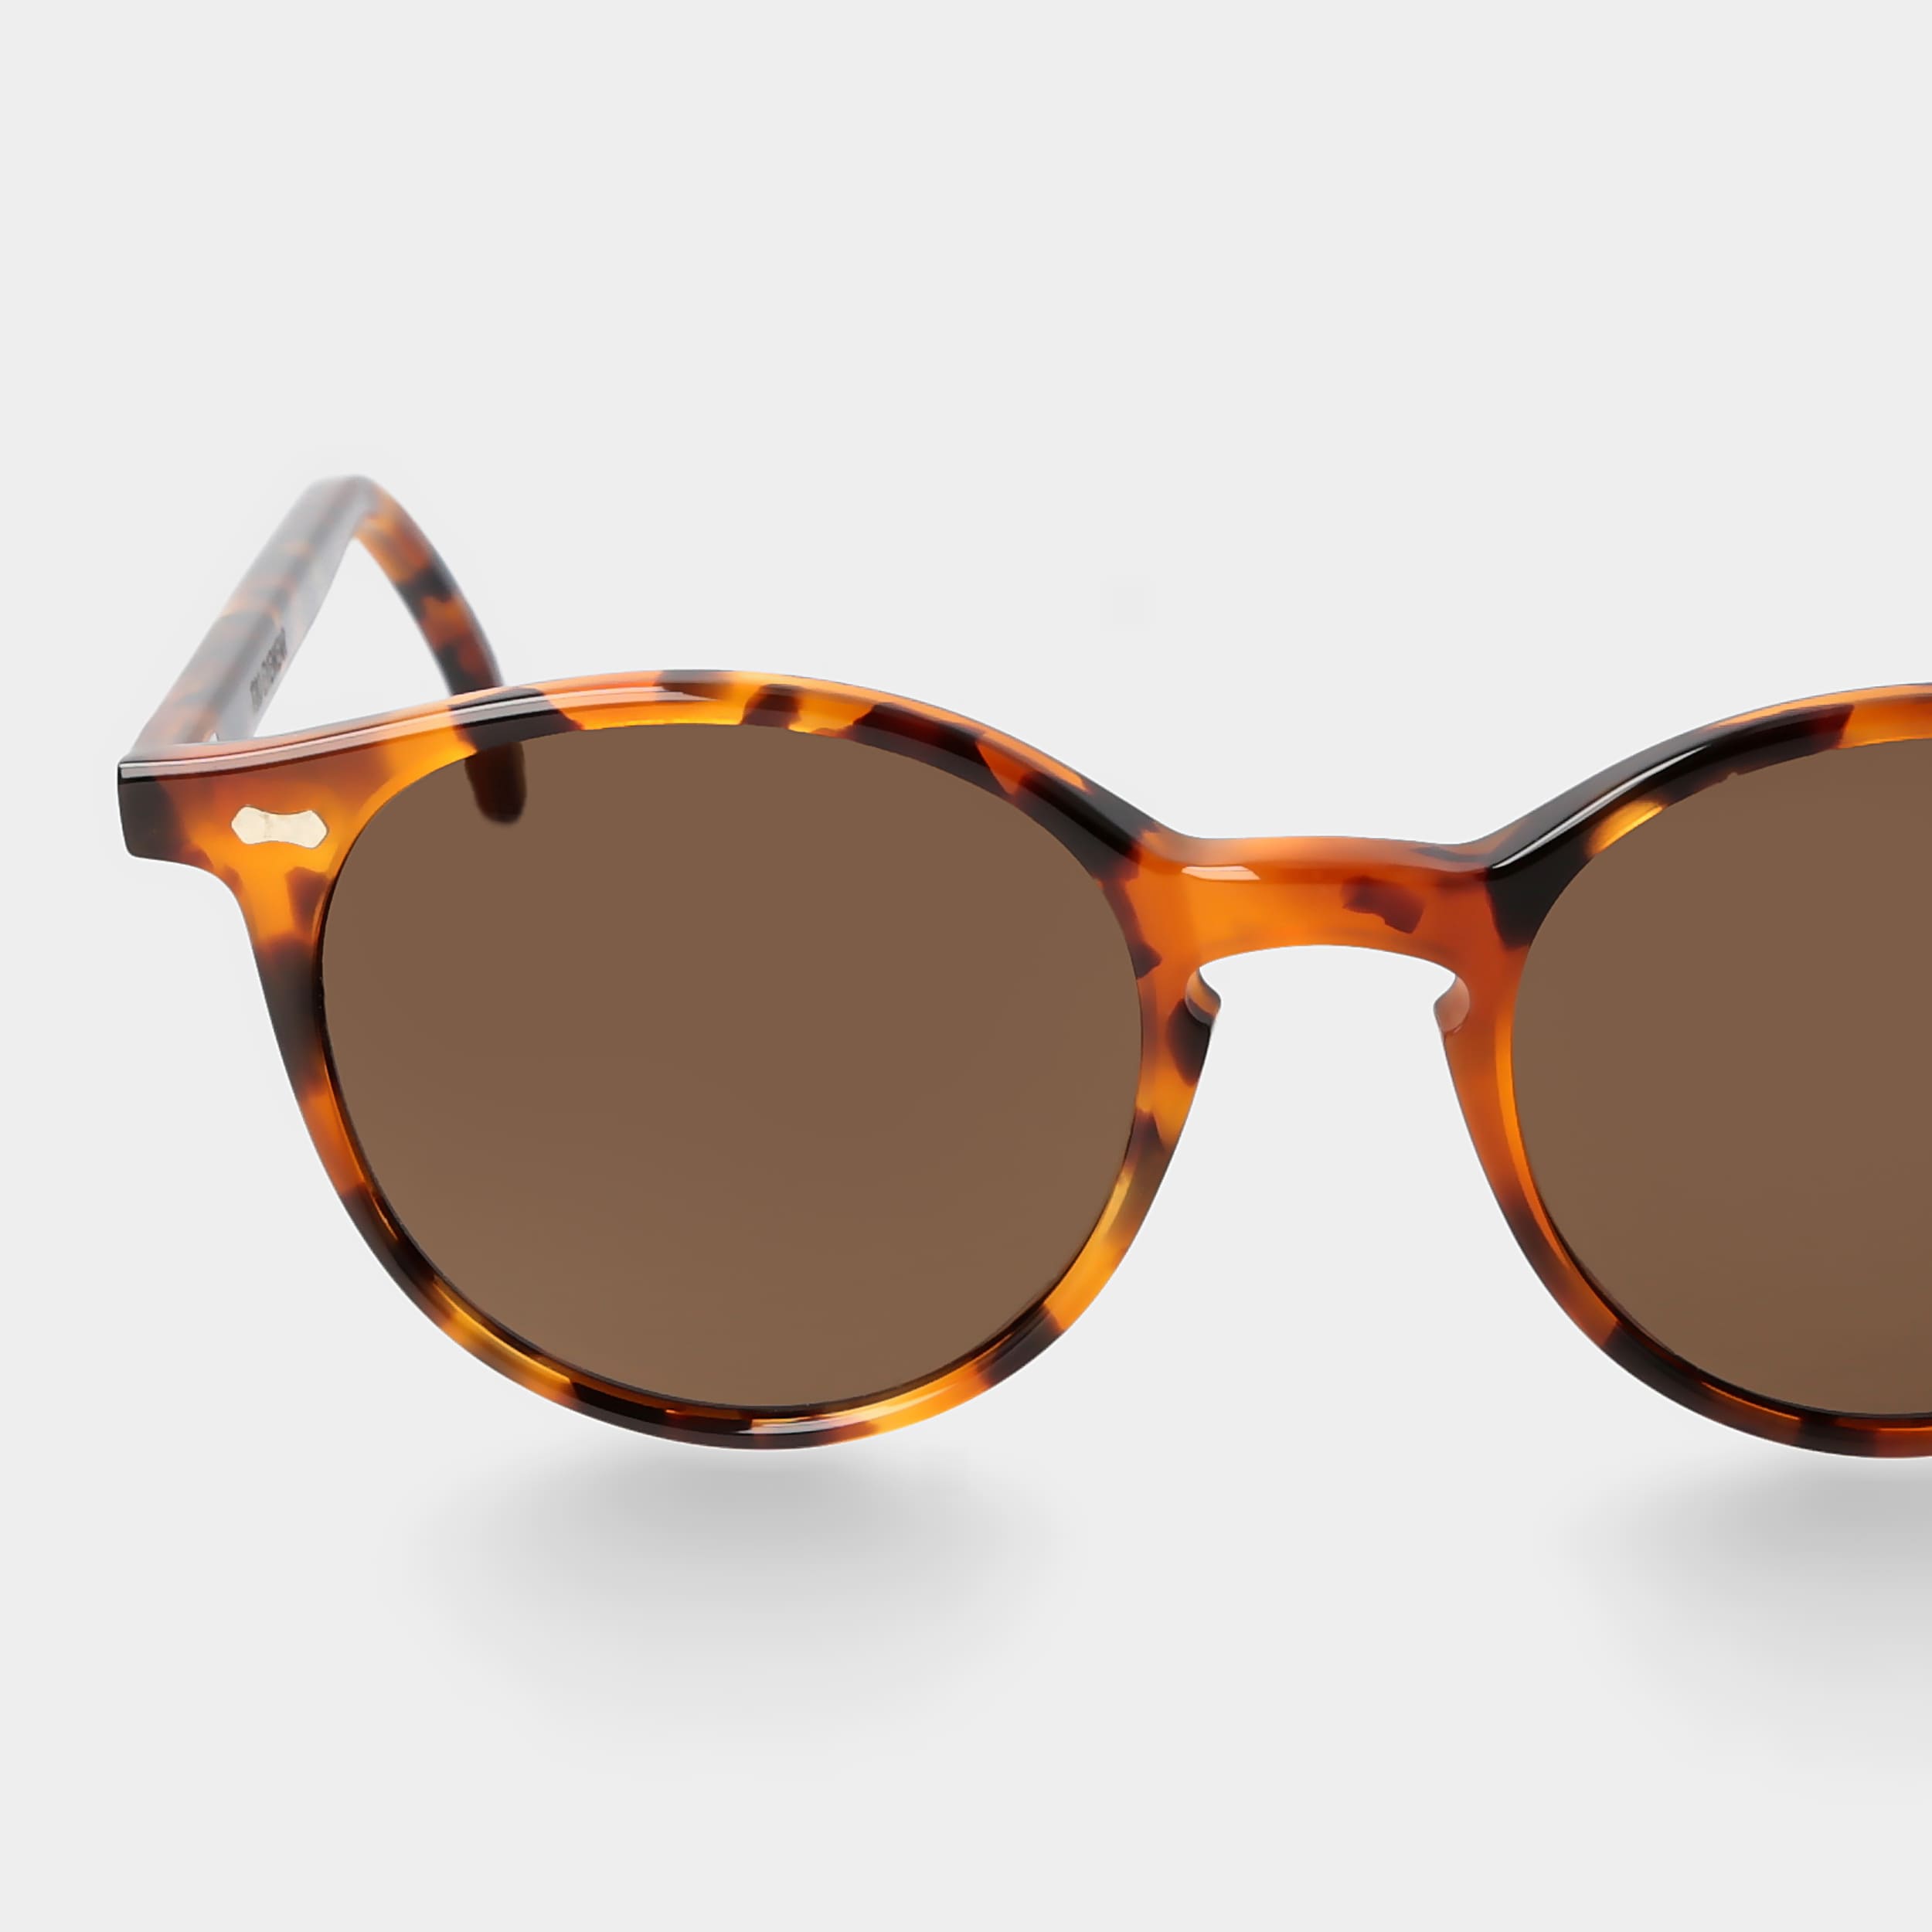 sunglasses-cran-amber-tortoise-tobacco-tbd-eyewear-lens